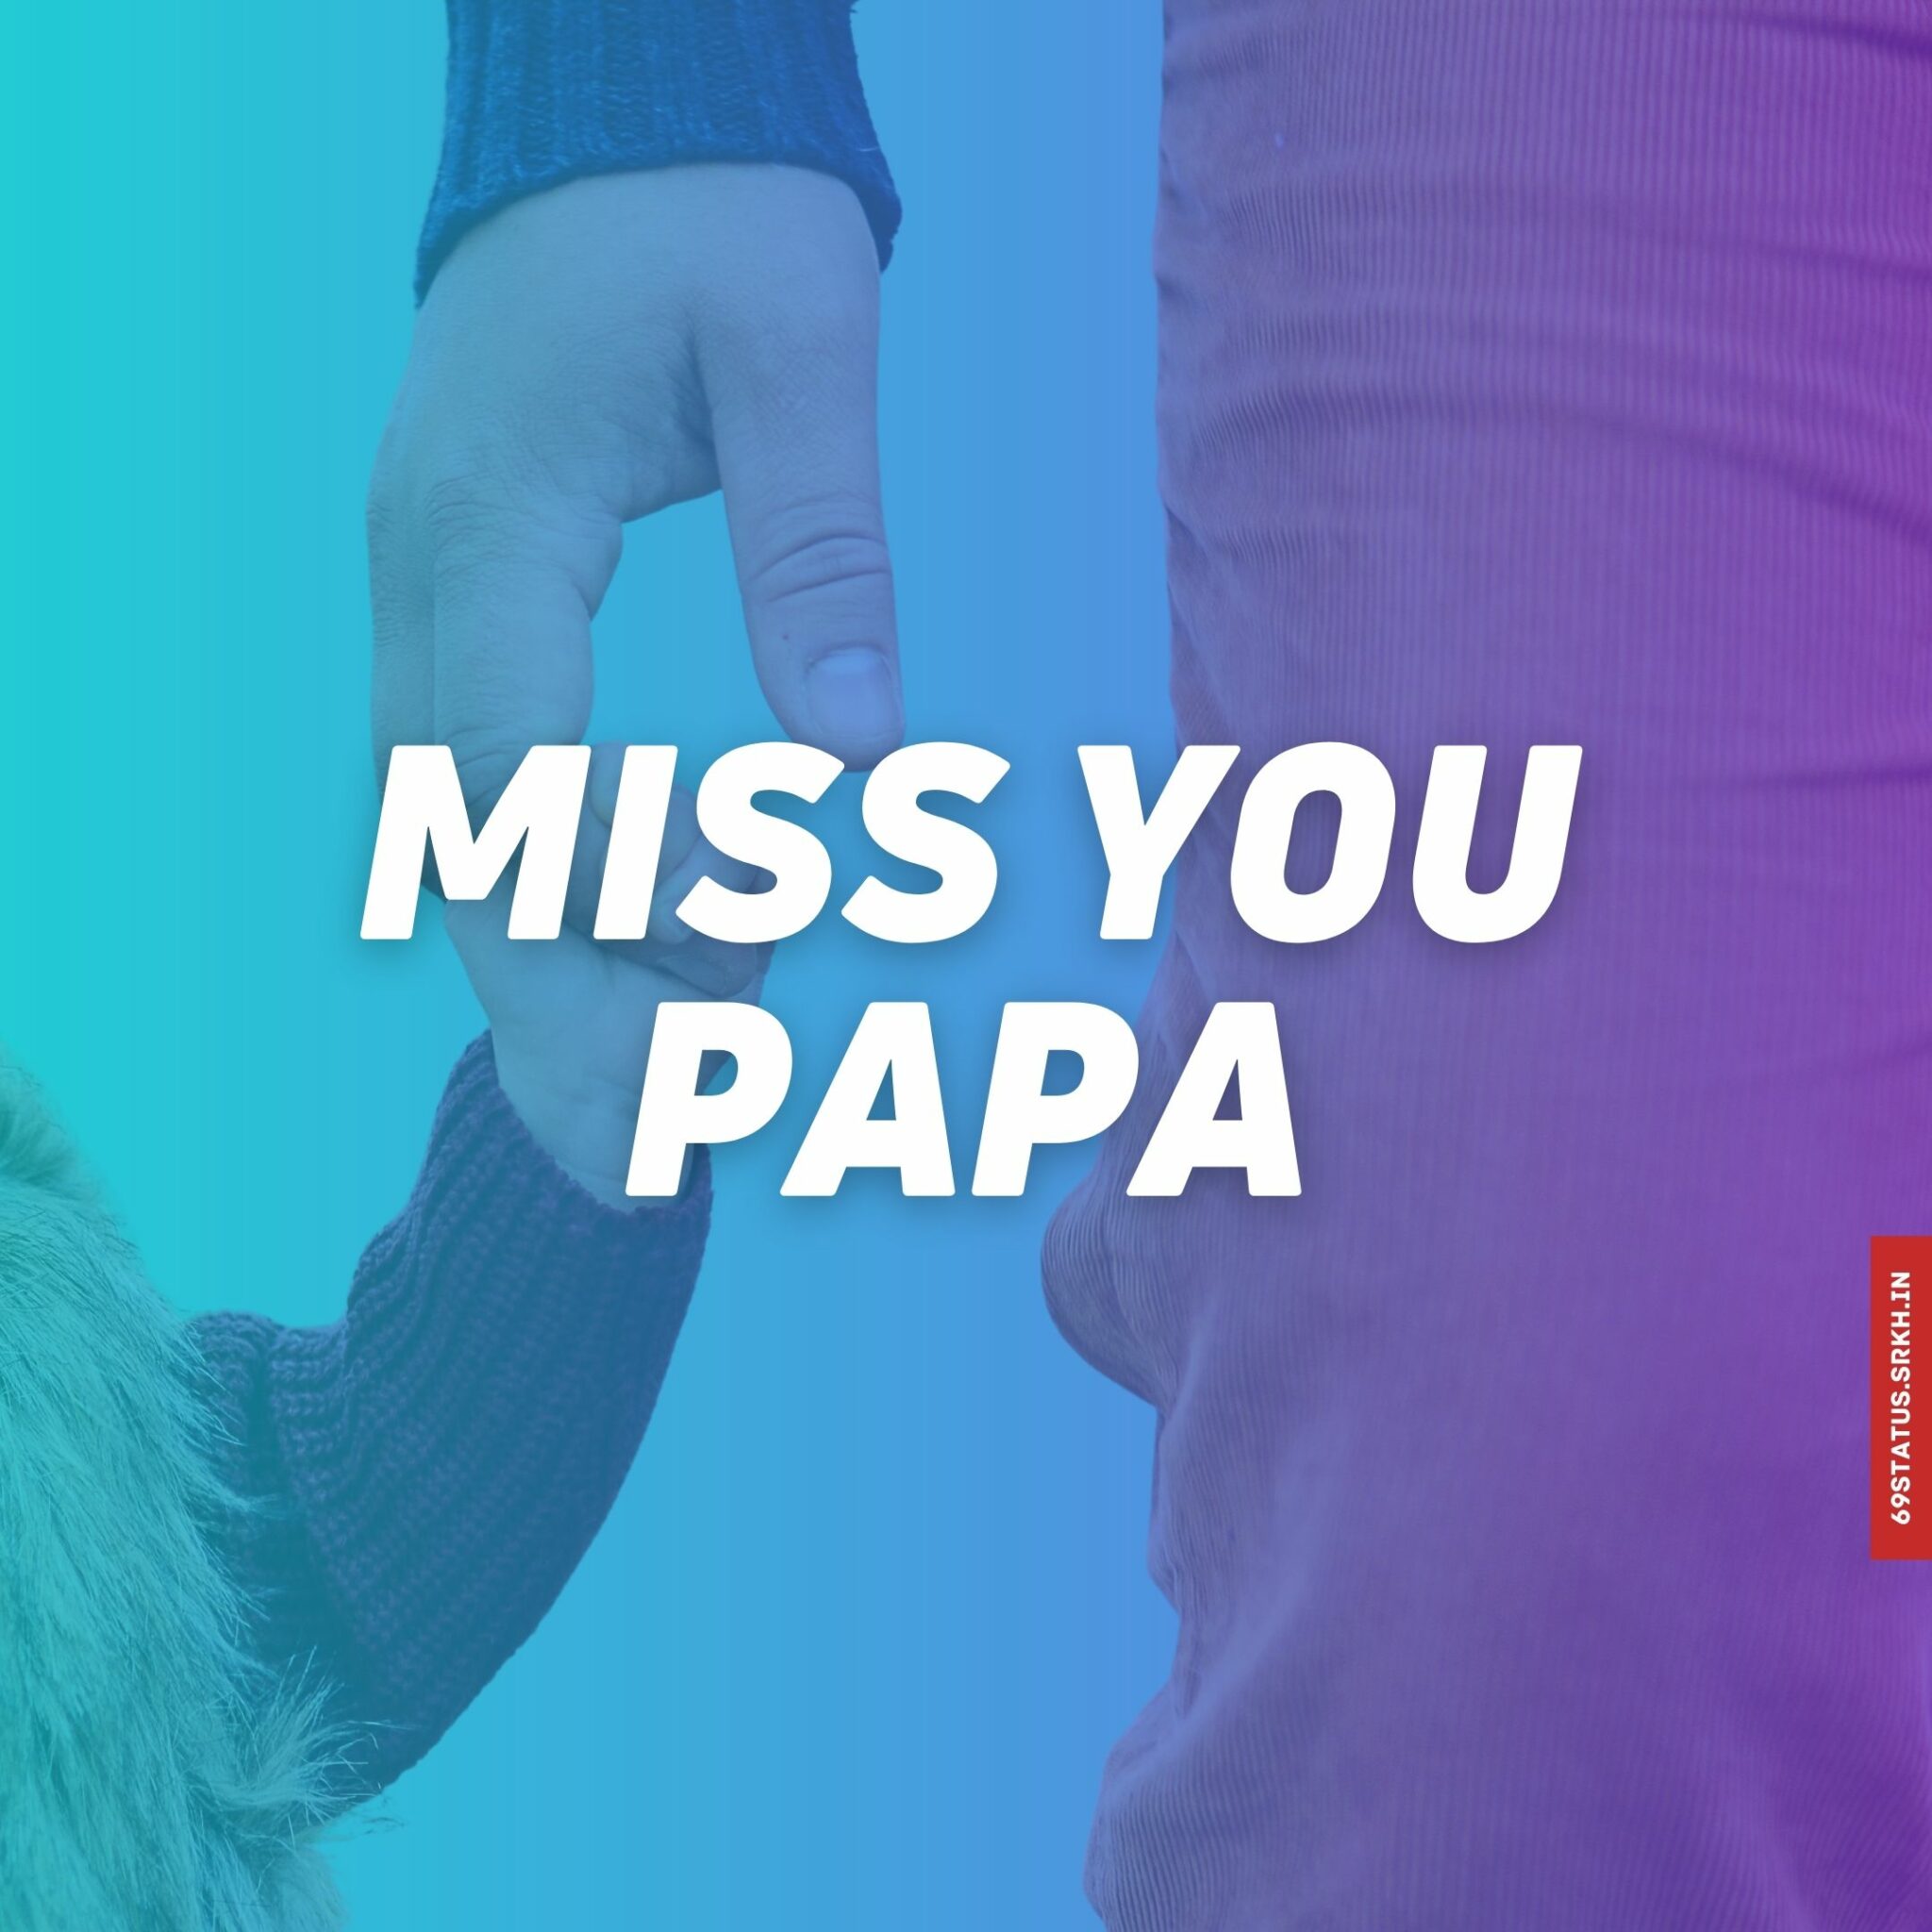 Miss you papa image